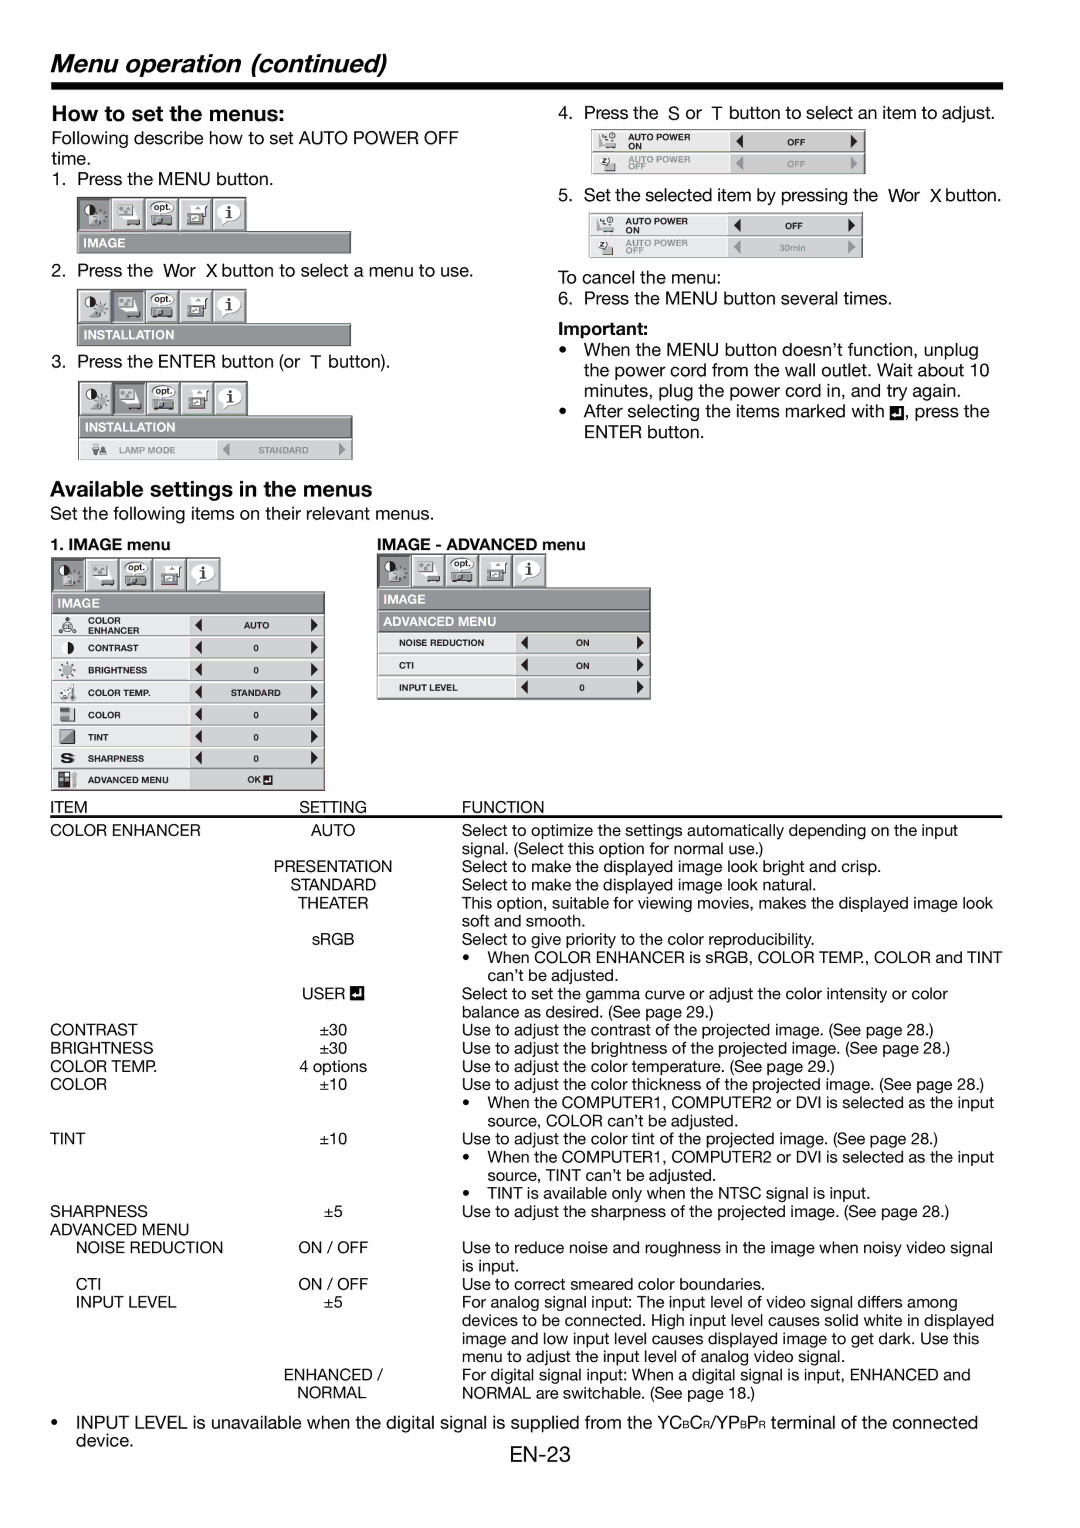 Mitsubishi Electronics FL7000 user manual Menu operation, How to set the menus, Available settings in the menus 